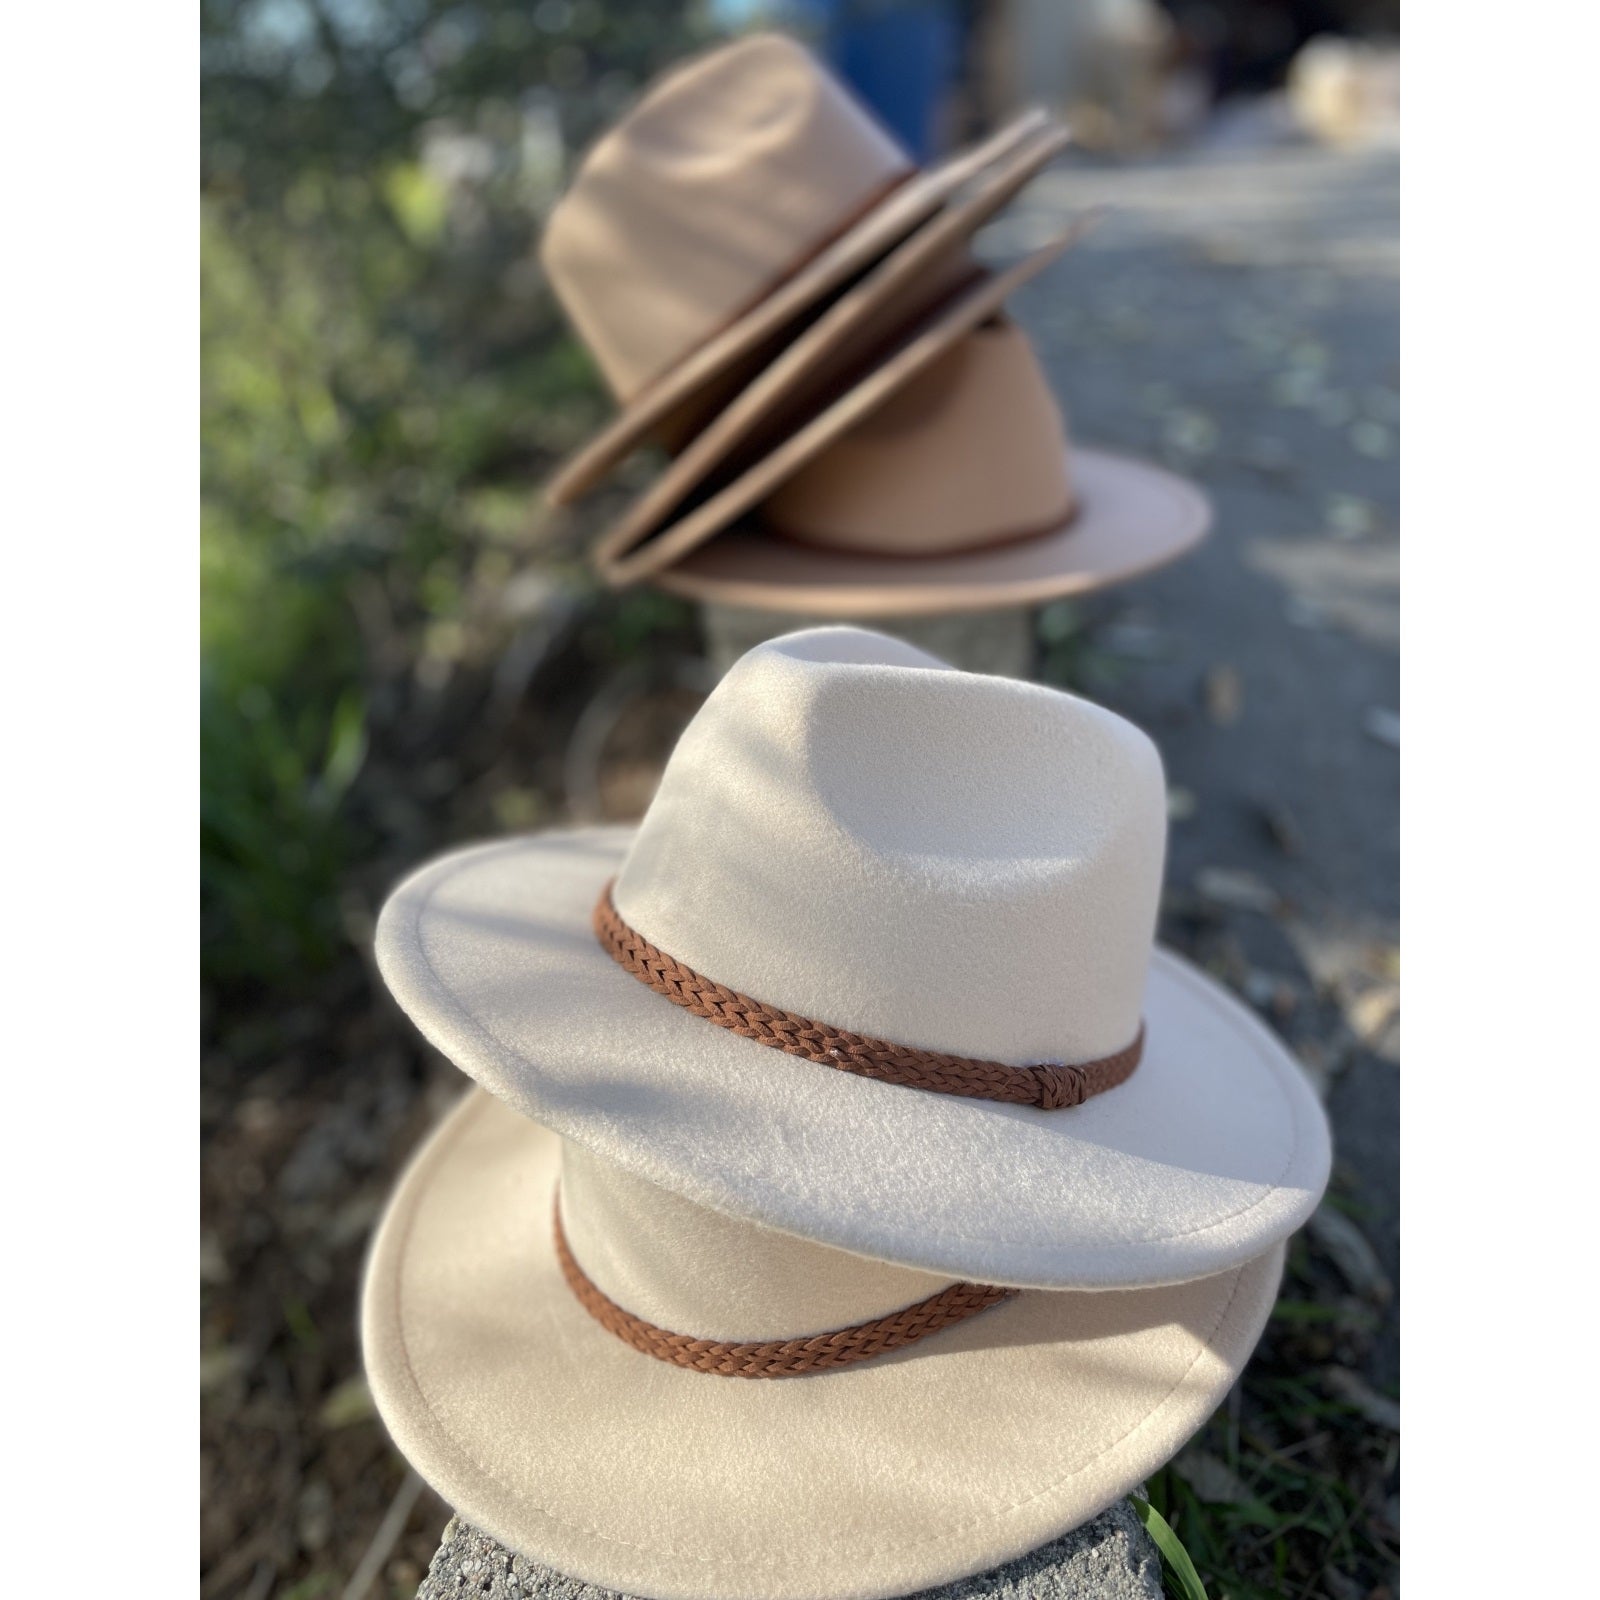 Hat female panama hat